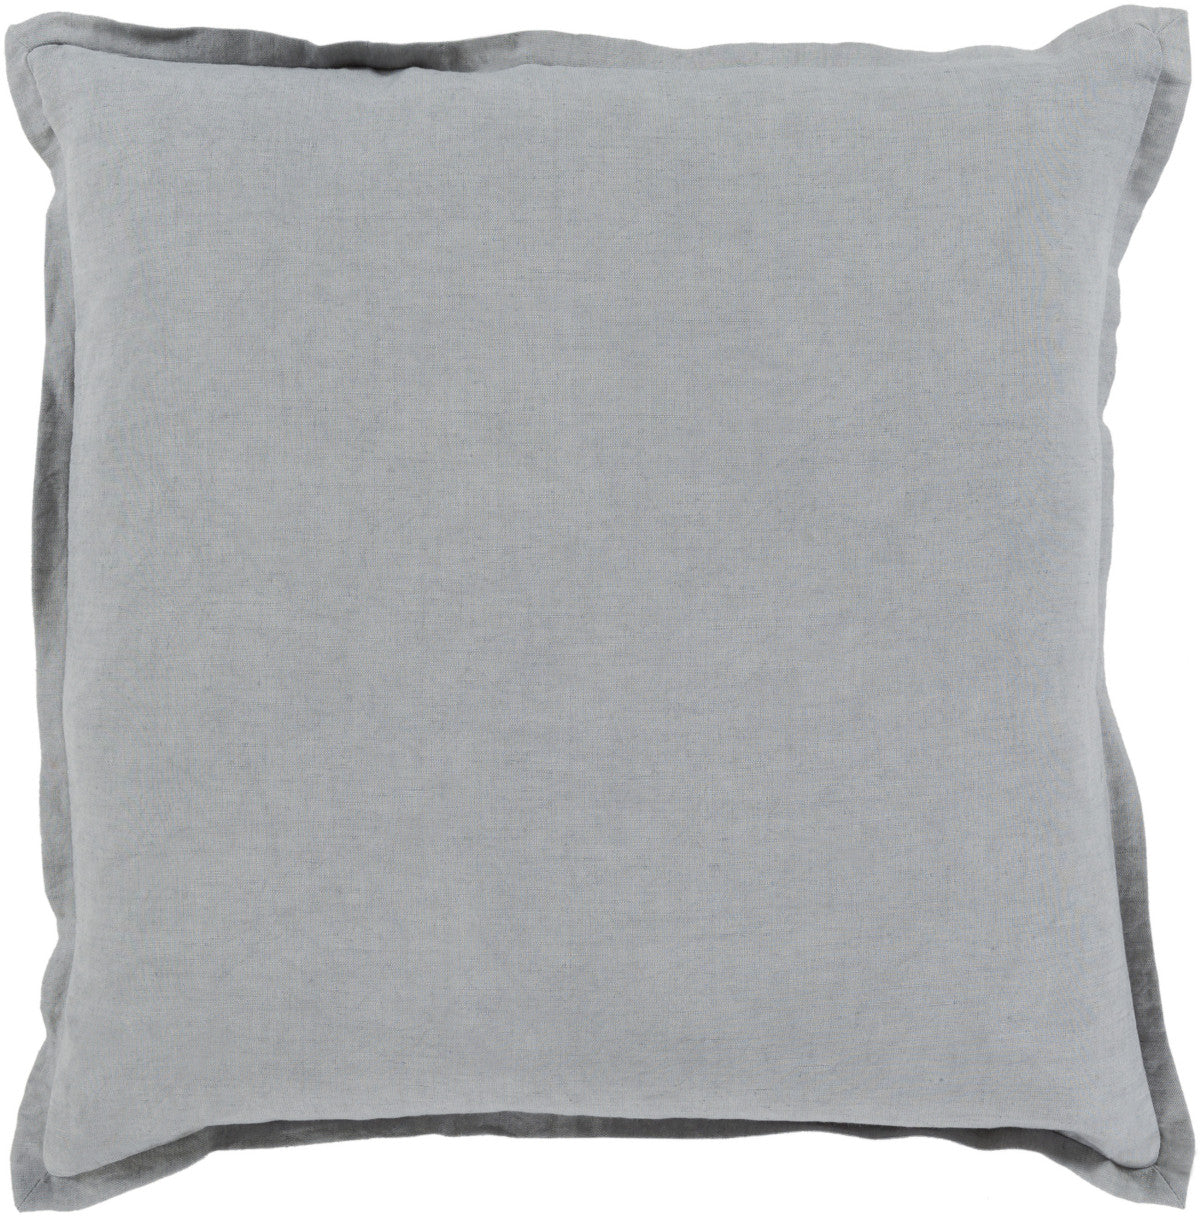 Surya Orianna OR009 Pillow